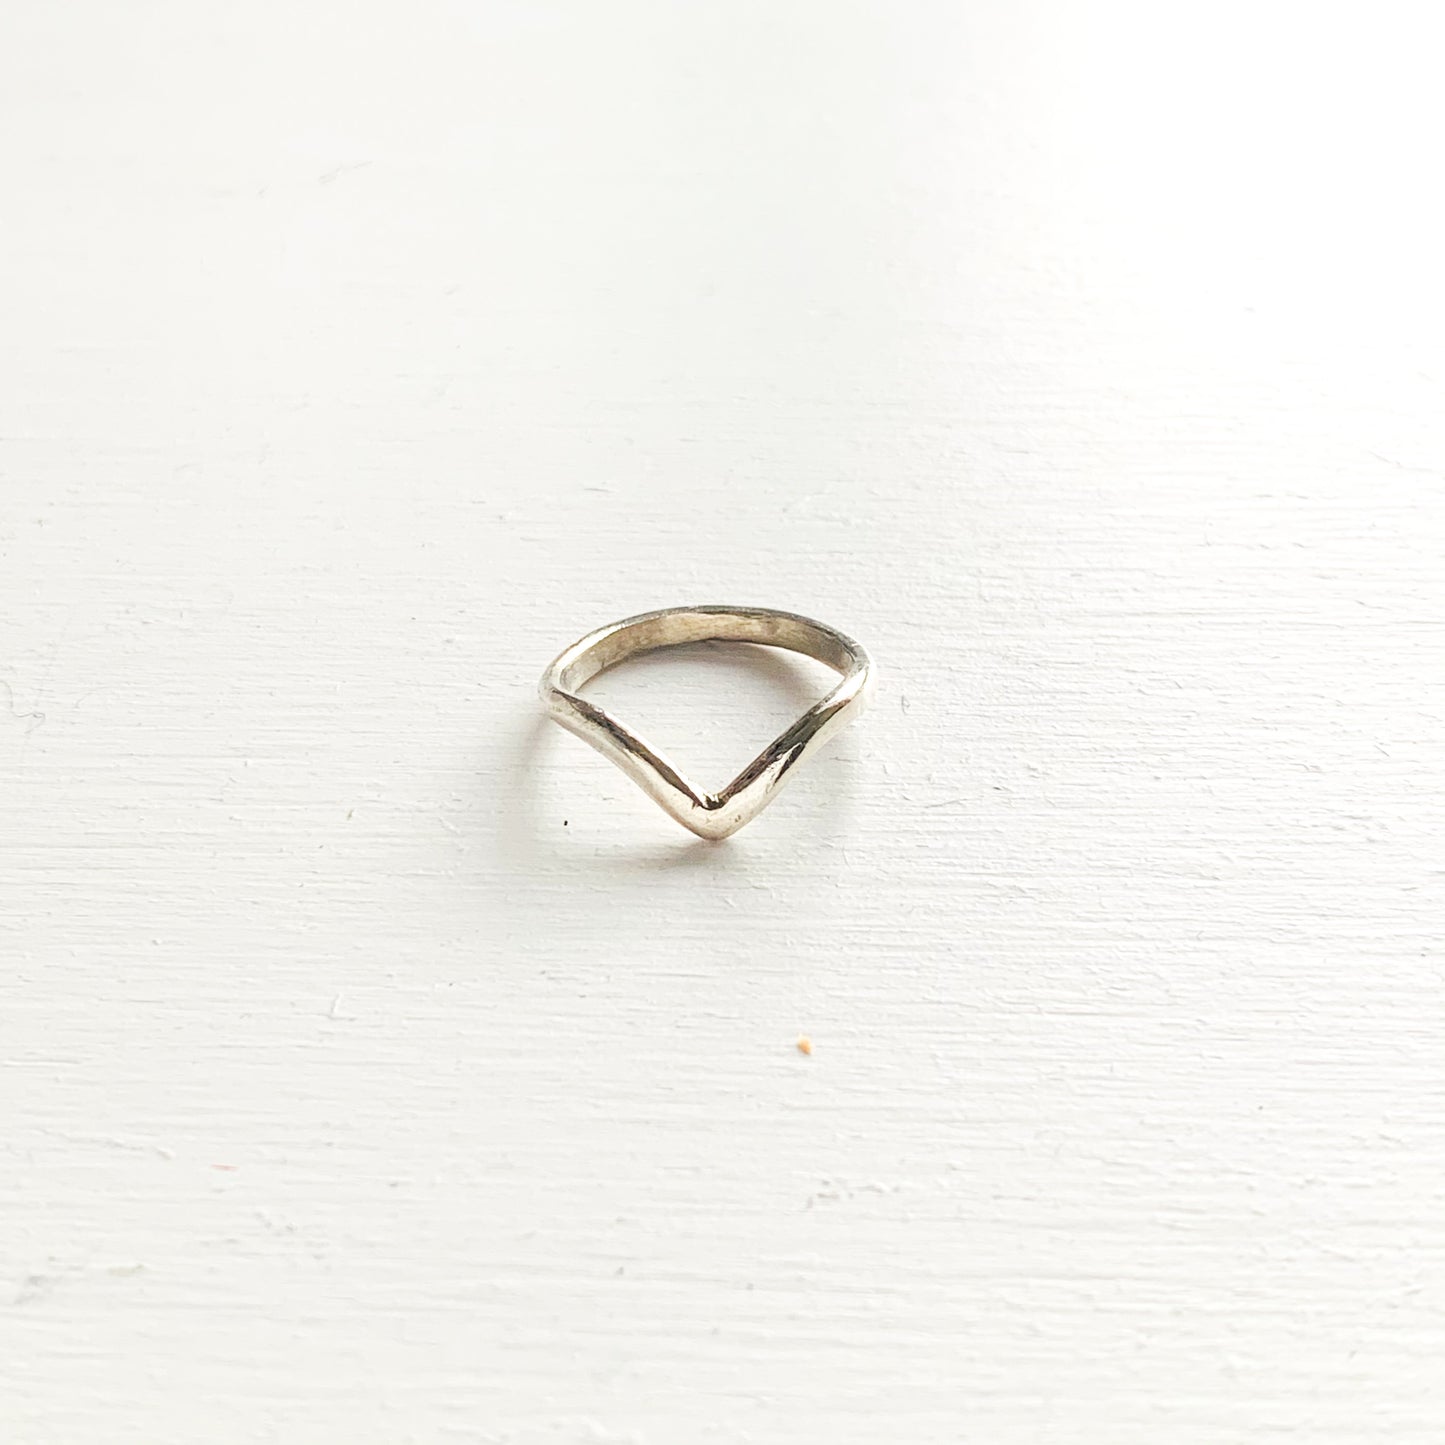 Sterling Silver Wishbone Ring